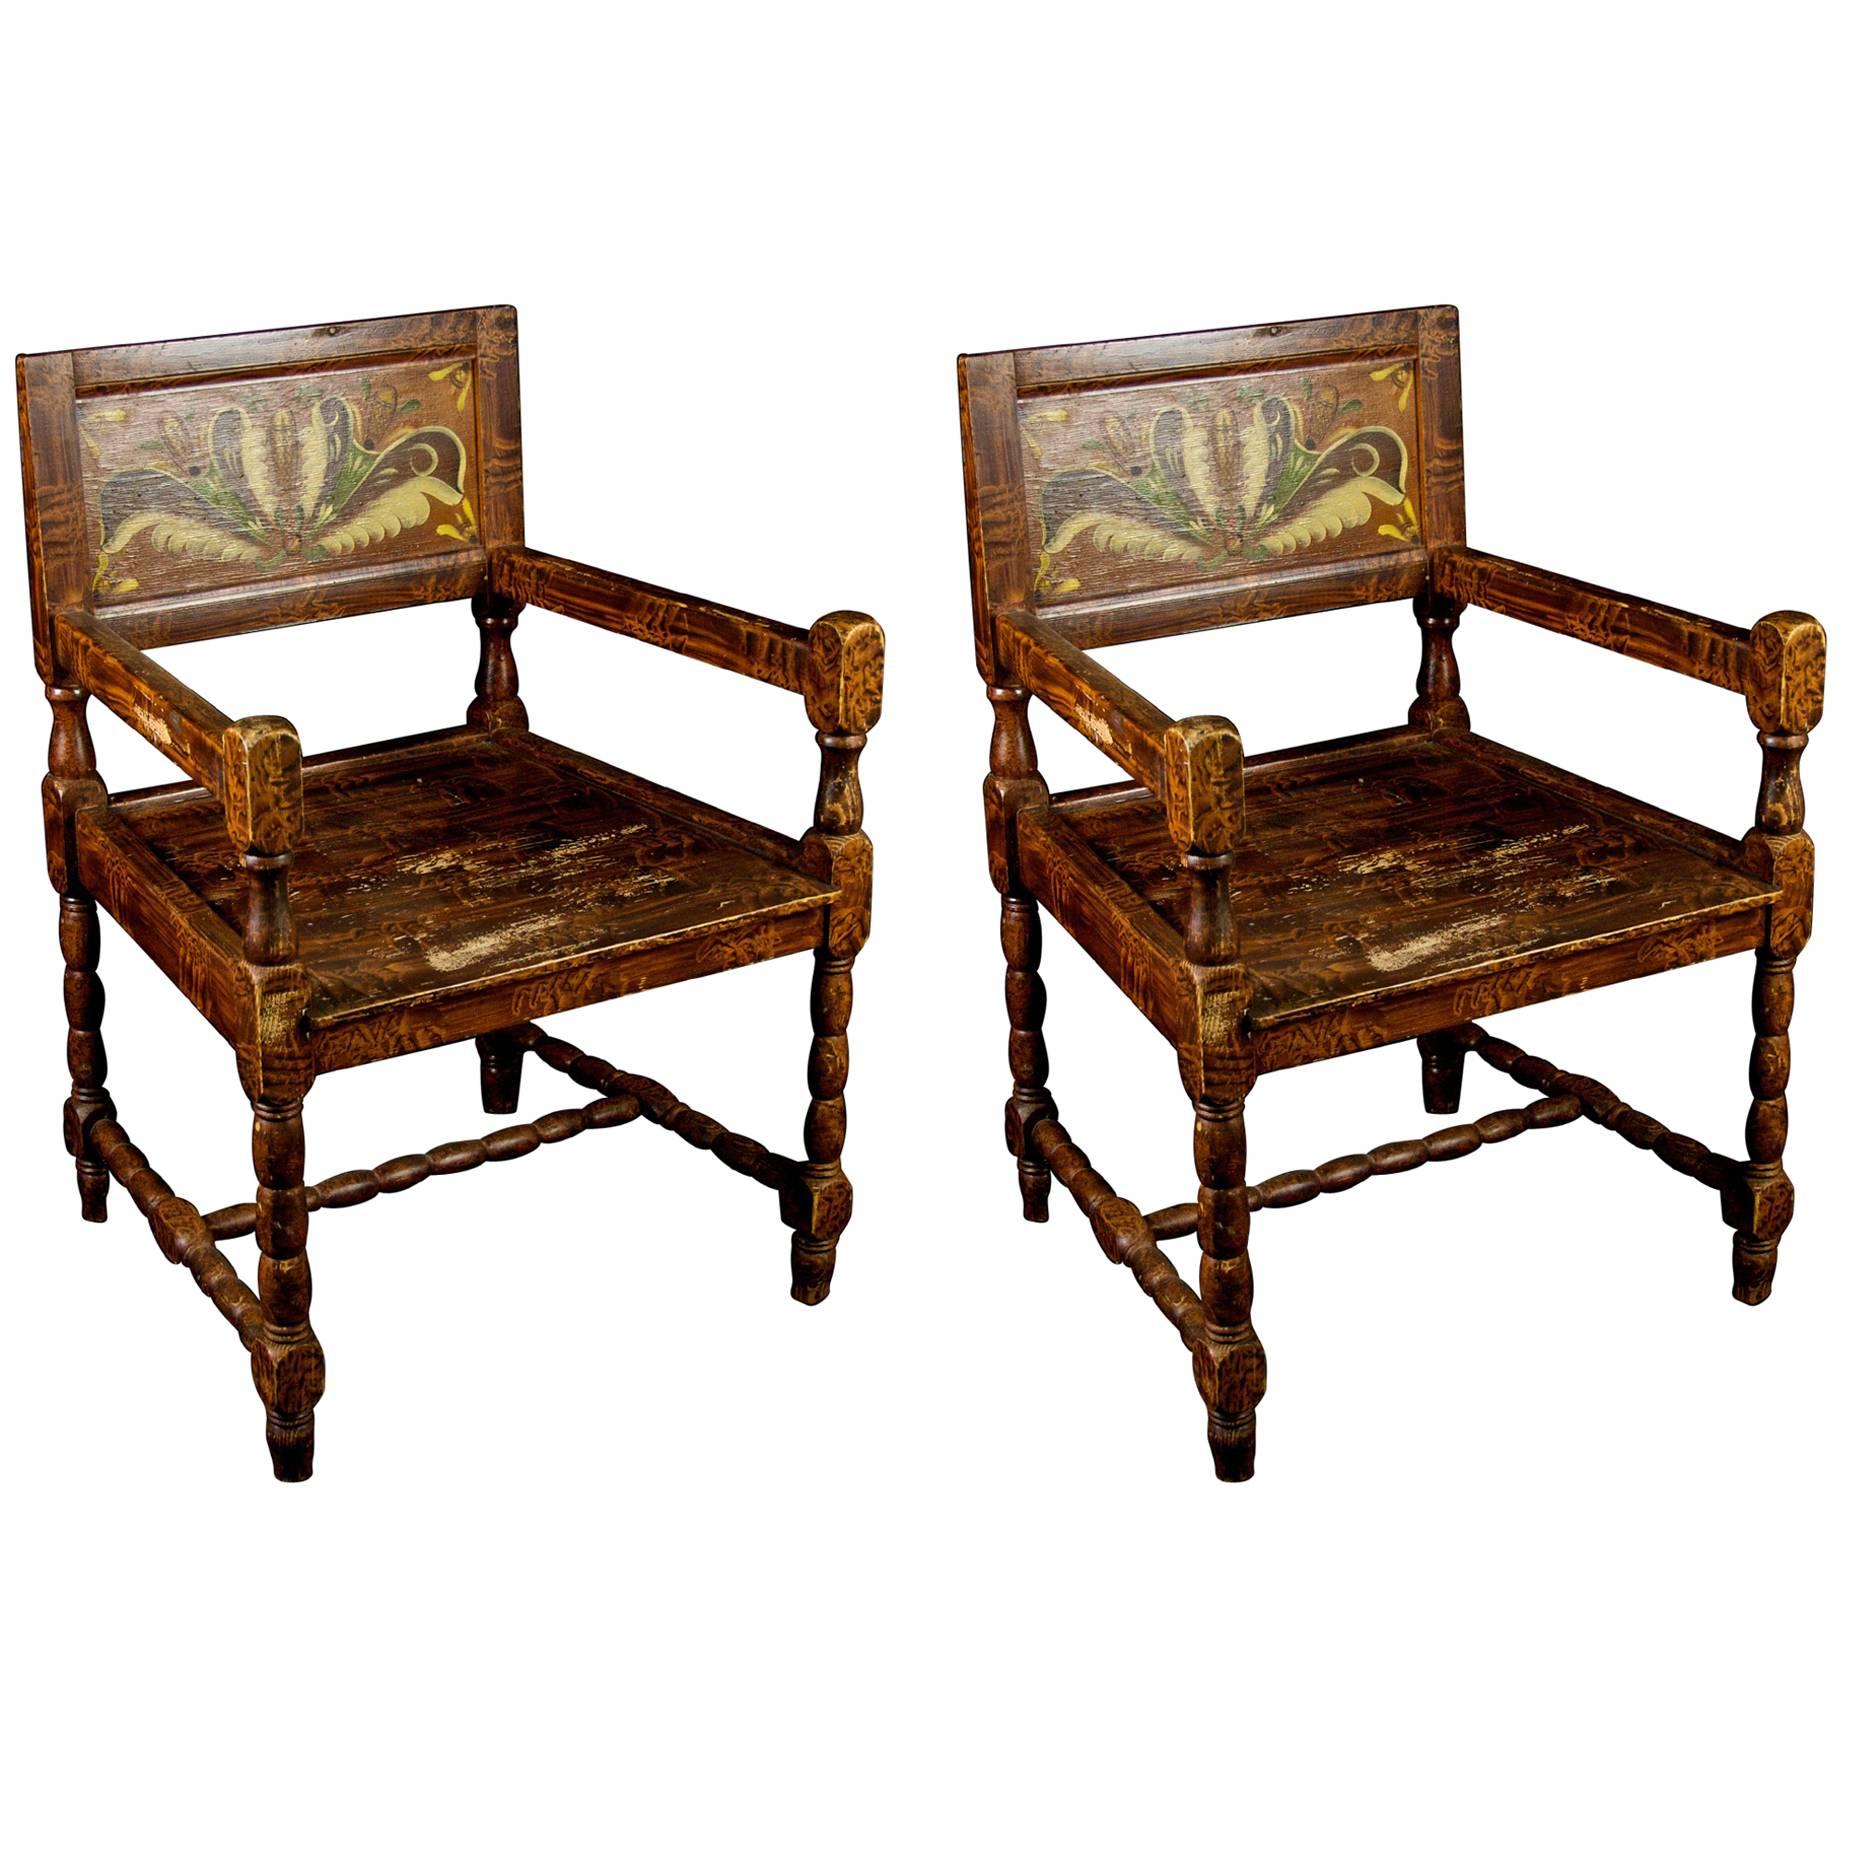 Antique Swedish Folk Art Countrry Carver Chairs in Kurbits Faux Wood Grain